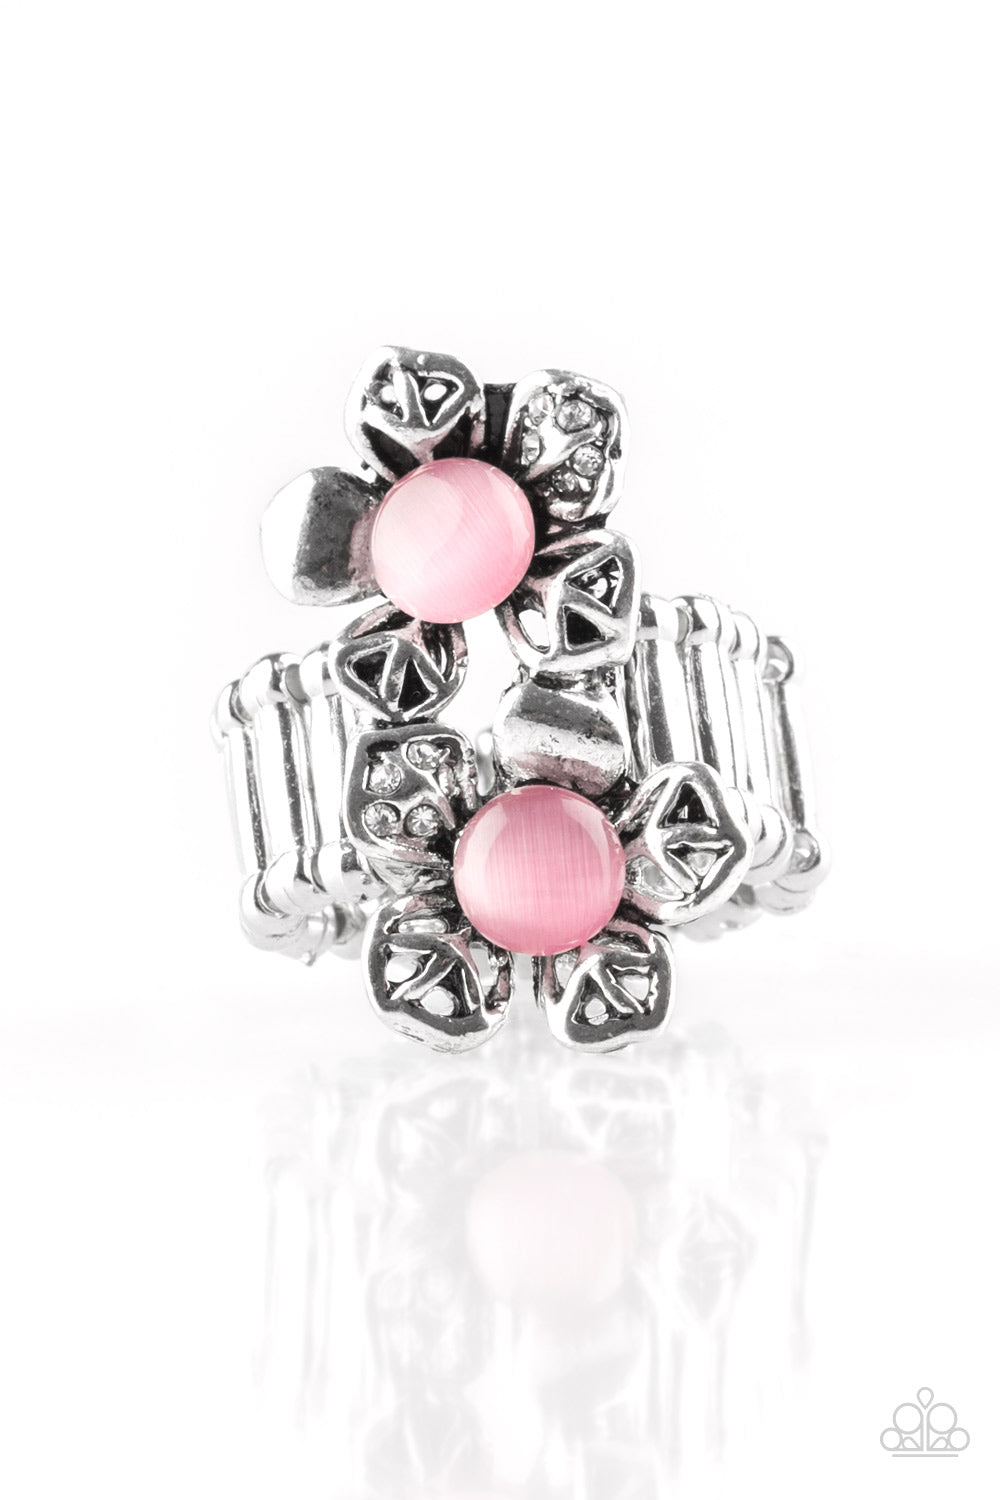 Magnolia Mansions Pink Paparazzi Rings Cashmere Pink Jewels - Cashmere Pink Jewels & Accessories, Cashmere Pink Jewels & Accessories - Paparazzi